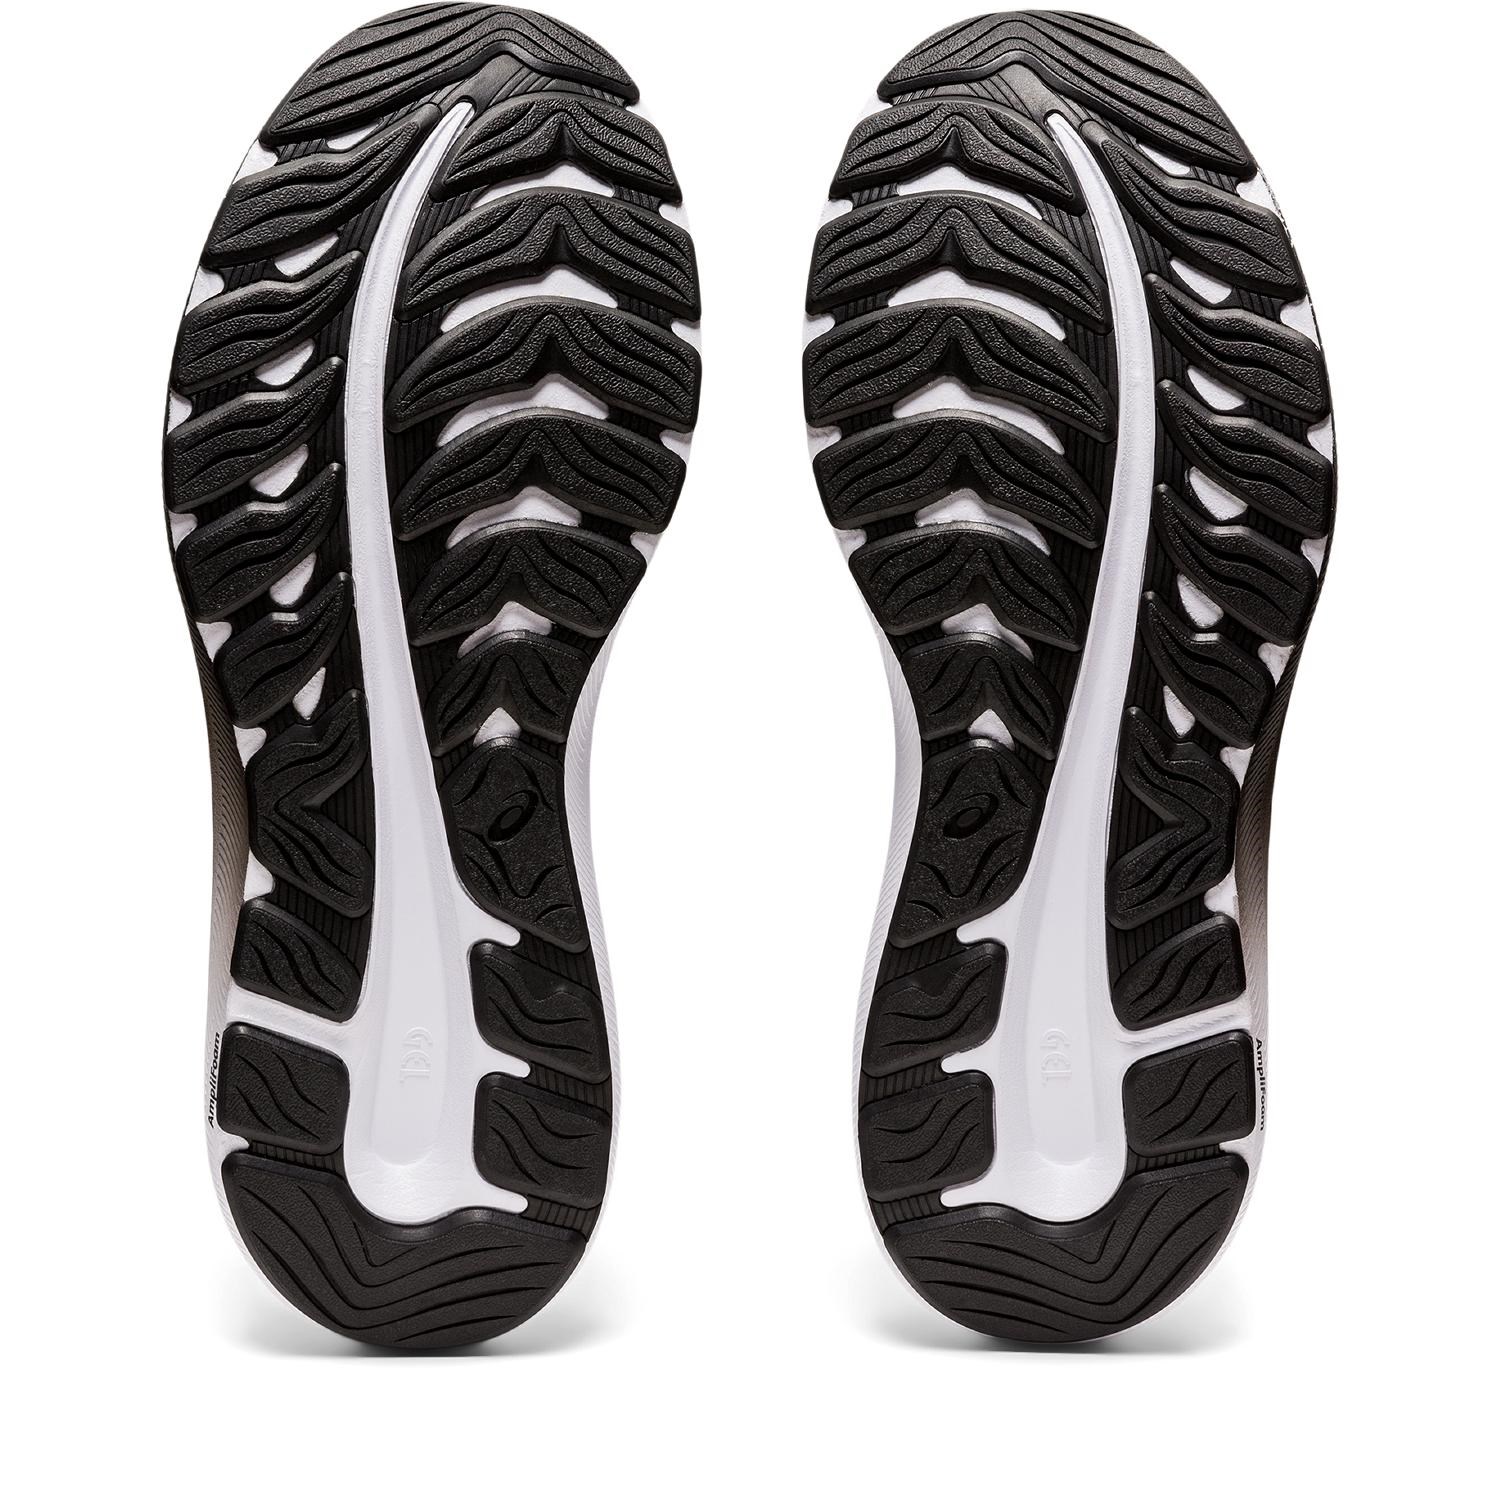 Asics Gel Excite 9 - Mens Running Shoes - Black/White | Sportitude